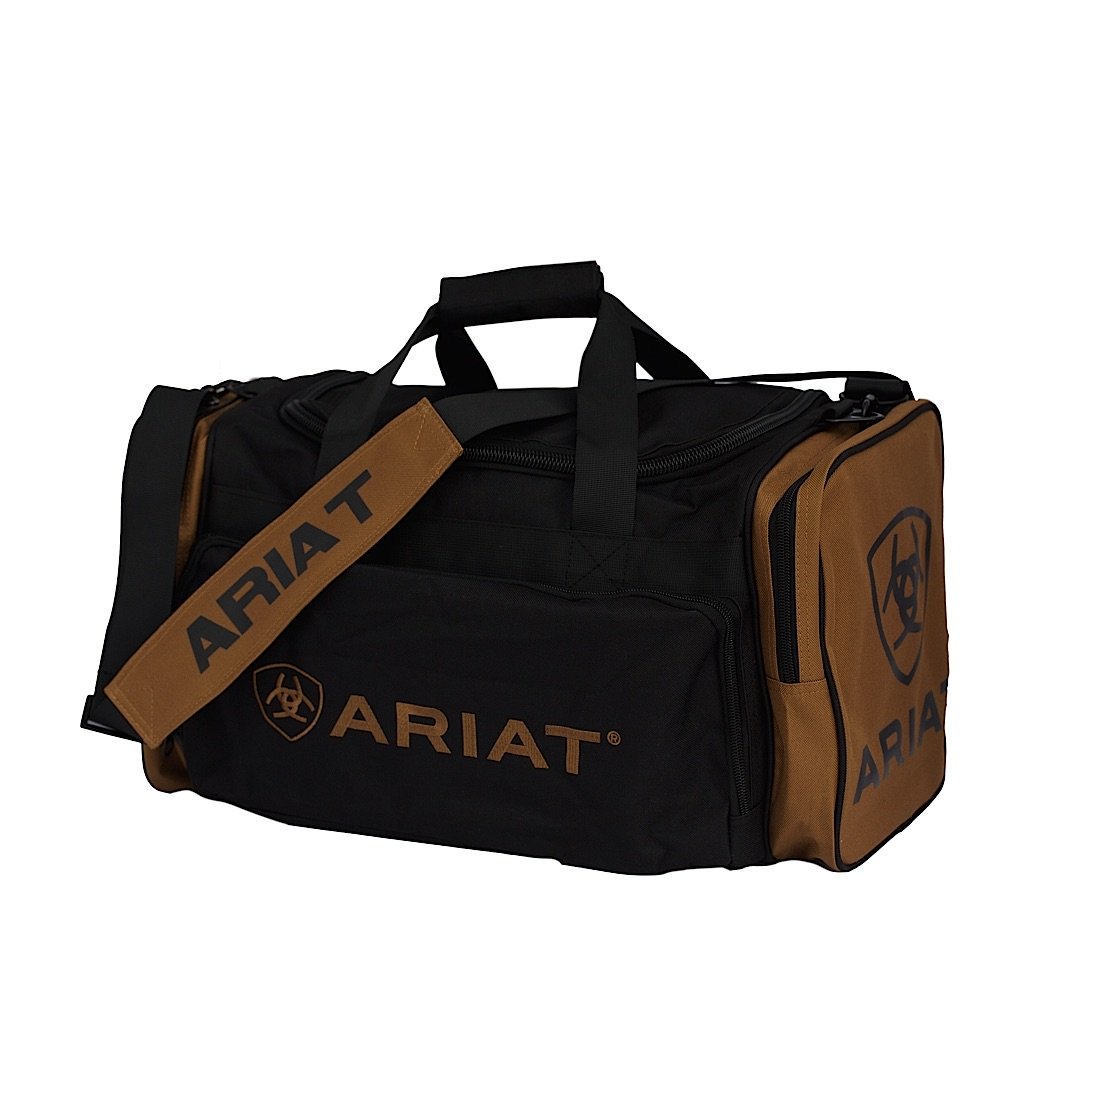 Ariat Jnr Gear Bag